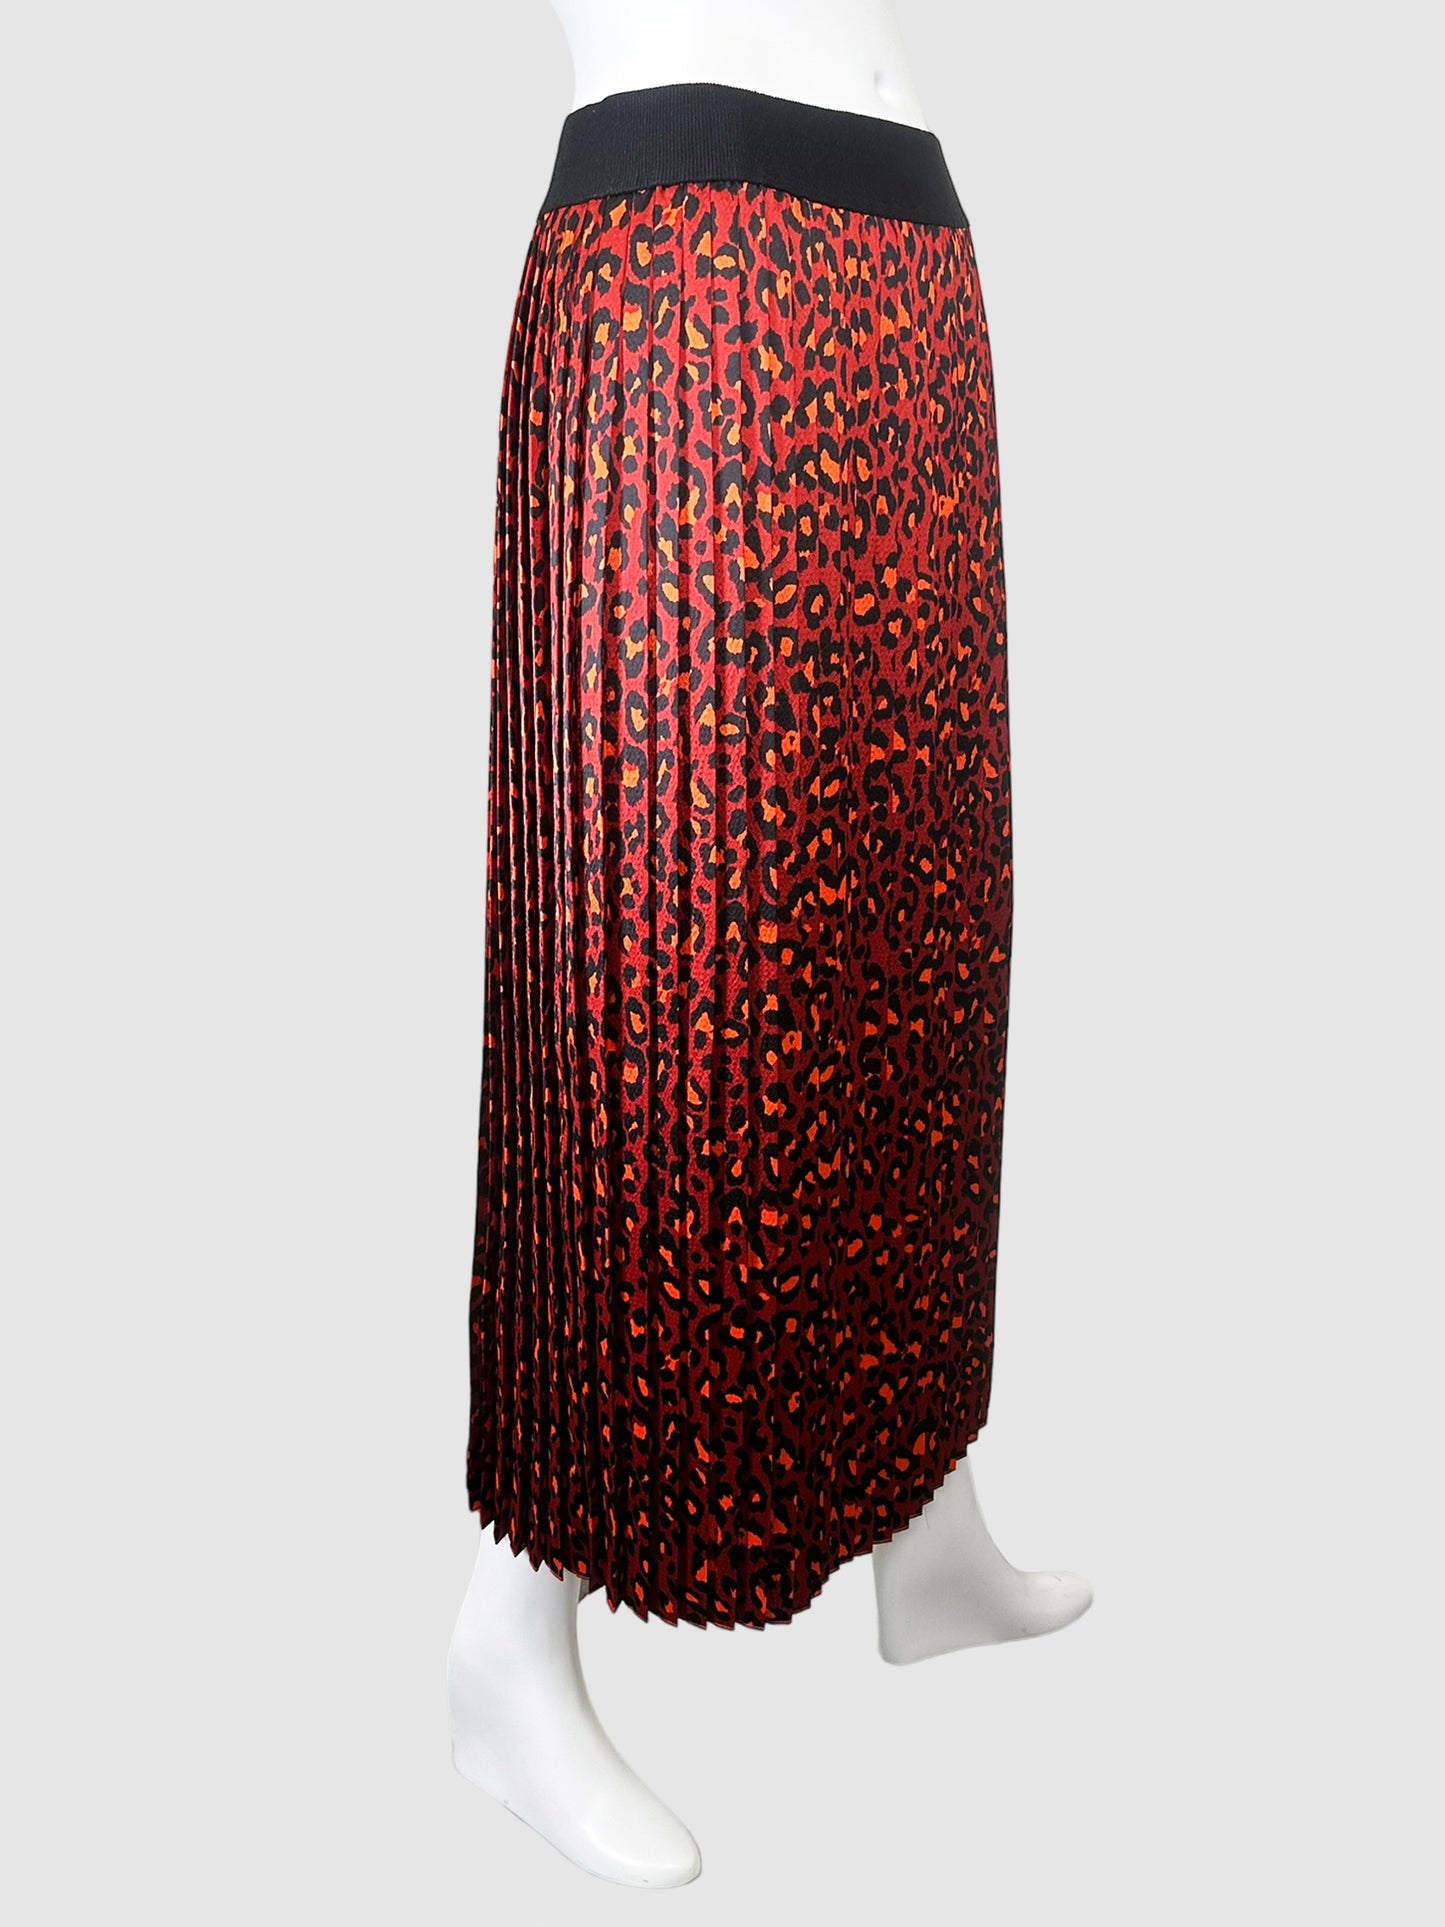 Hugo Boss Animal Print Pleated Skirt - Size 4